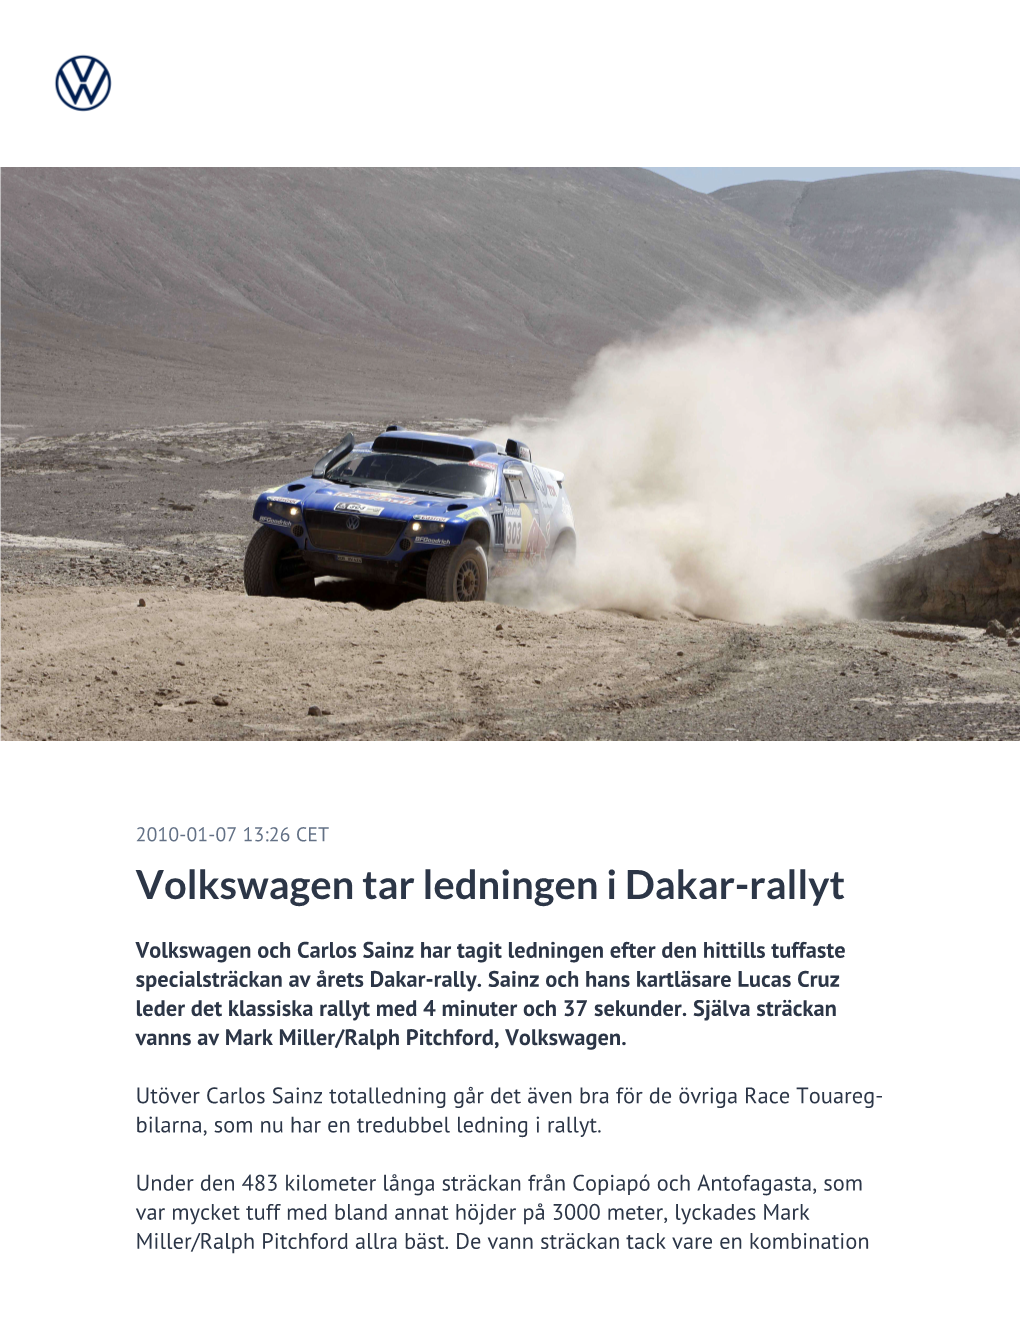 Volkswagen Tar Ledningen I Dakar-Rallyt